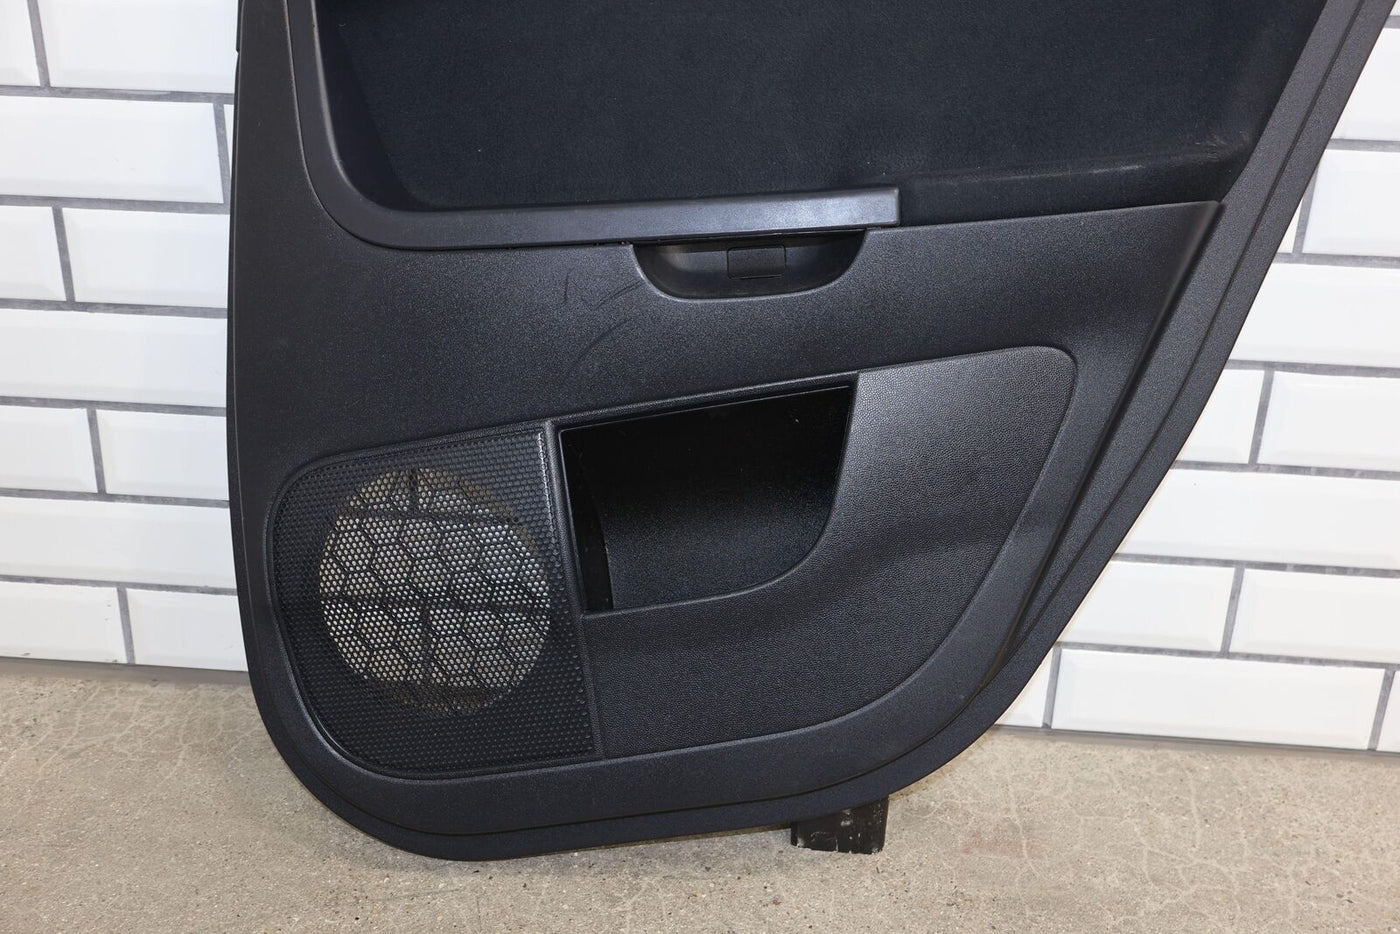 08-13 Mitsubishi Lancer EVO X GSR Interior Door Trim panels Set of 4 (Black)